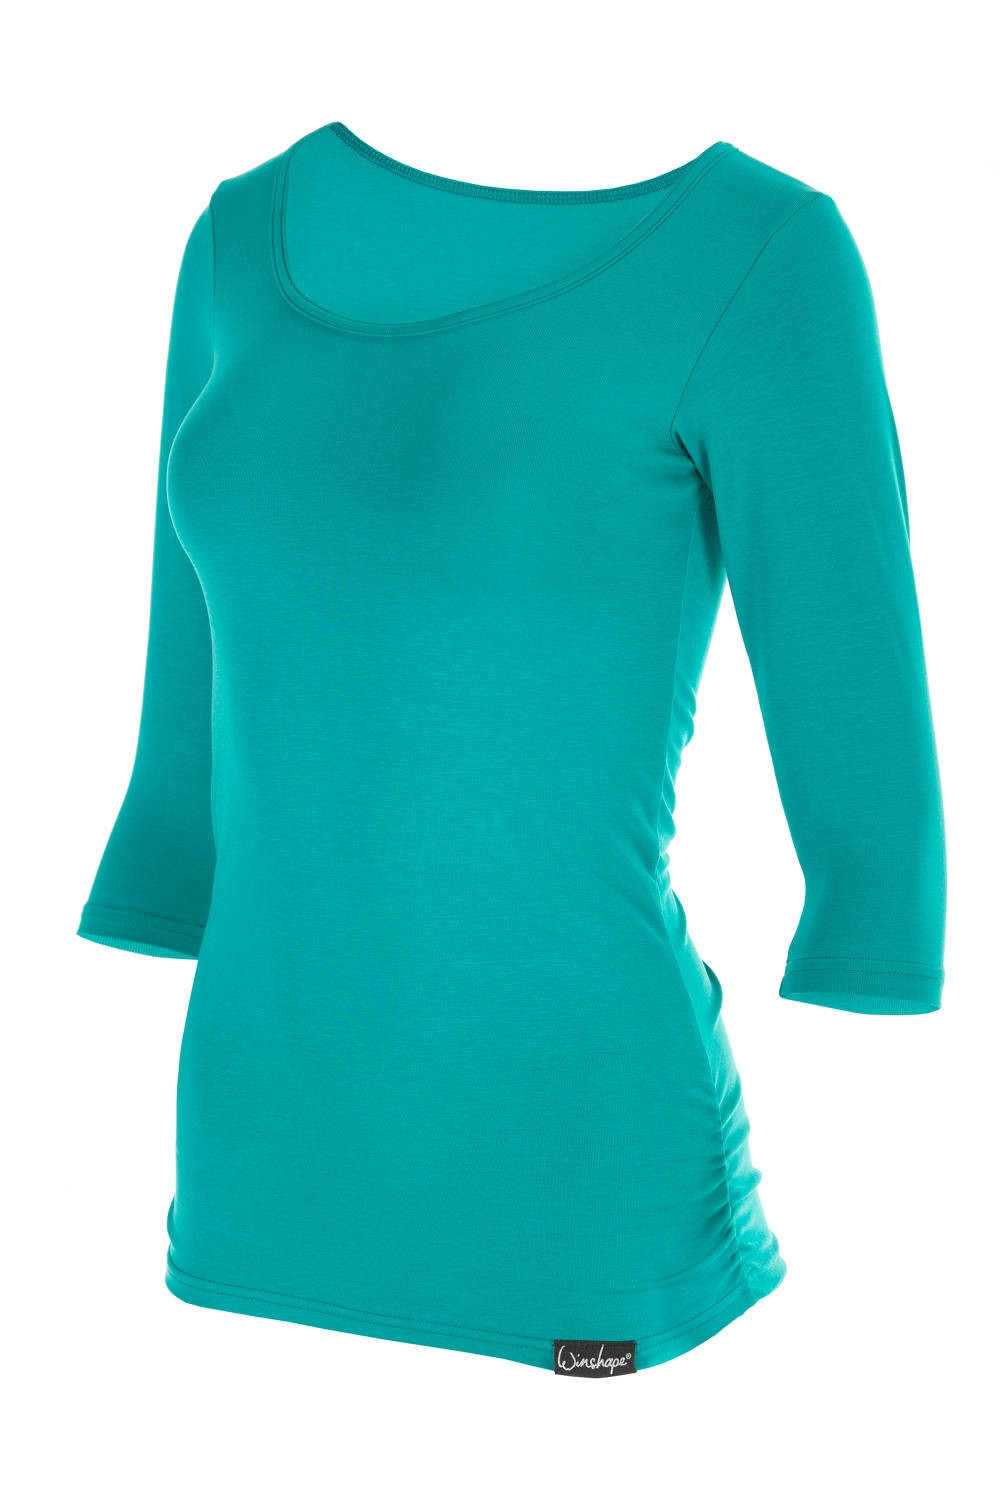 Shirt Winshape Flow Style green 3/4-Arm WS4, ocean ,